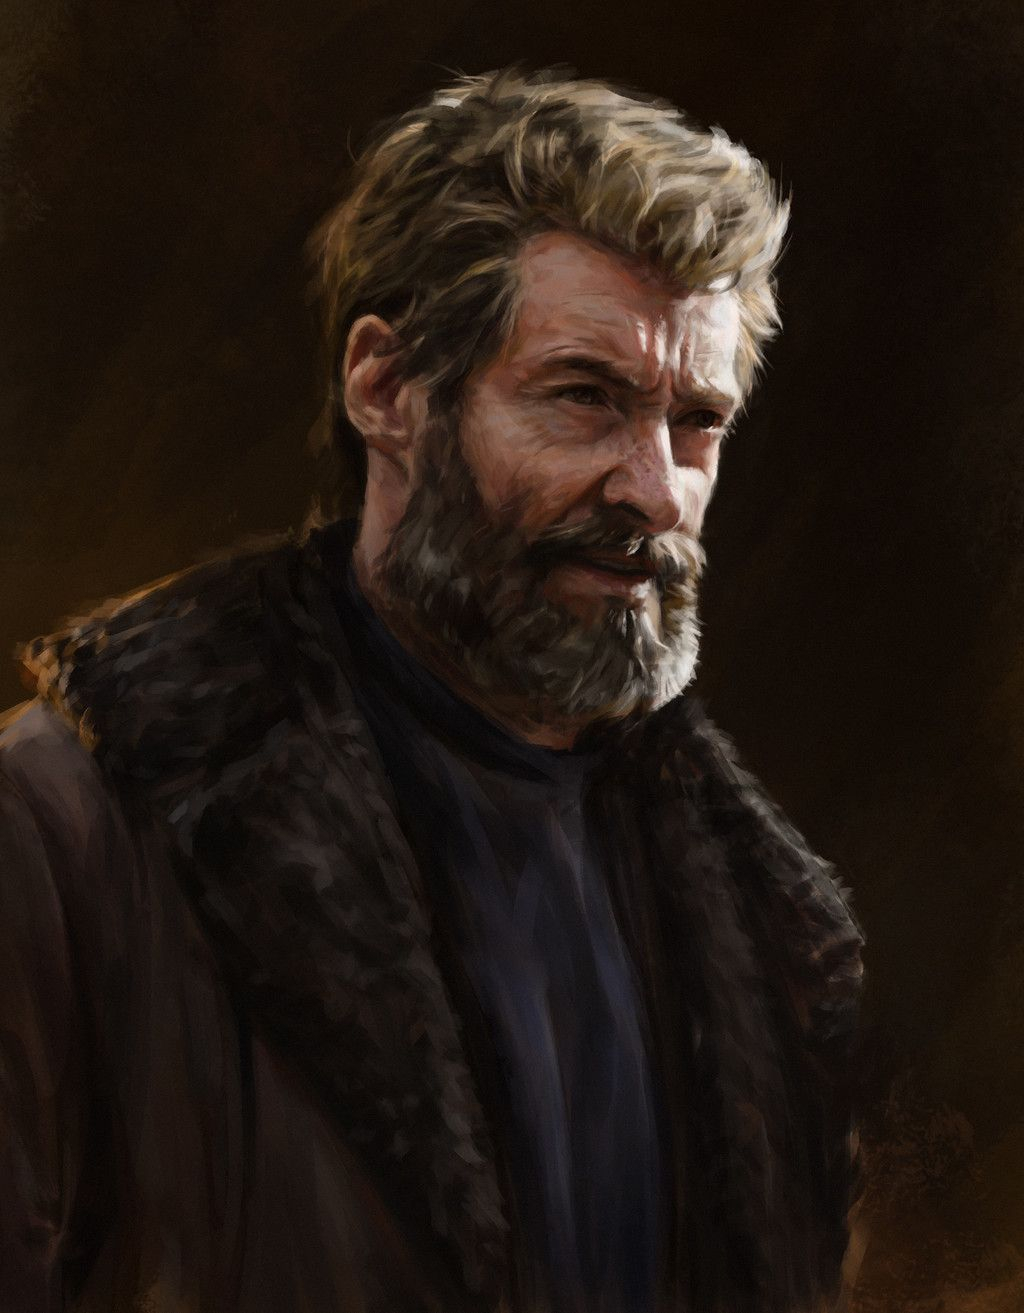 Hugh Jackman Wolverine Old , HD Wallpaper & Backgrounds